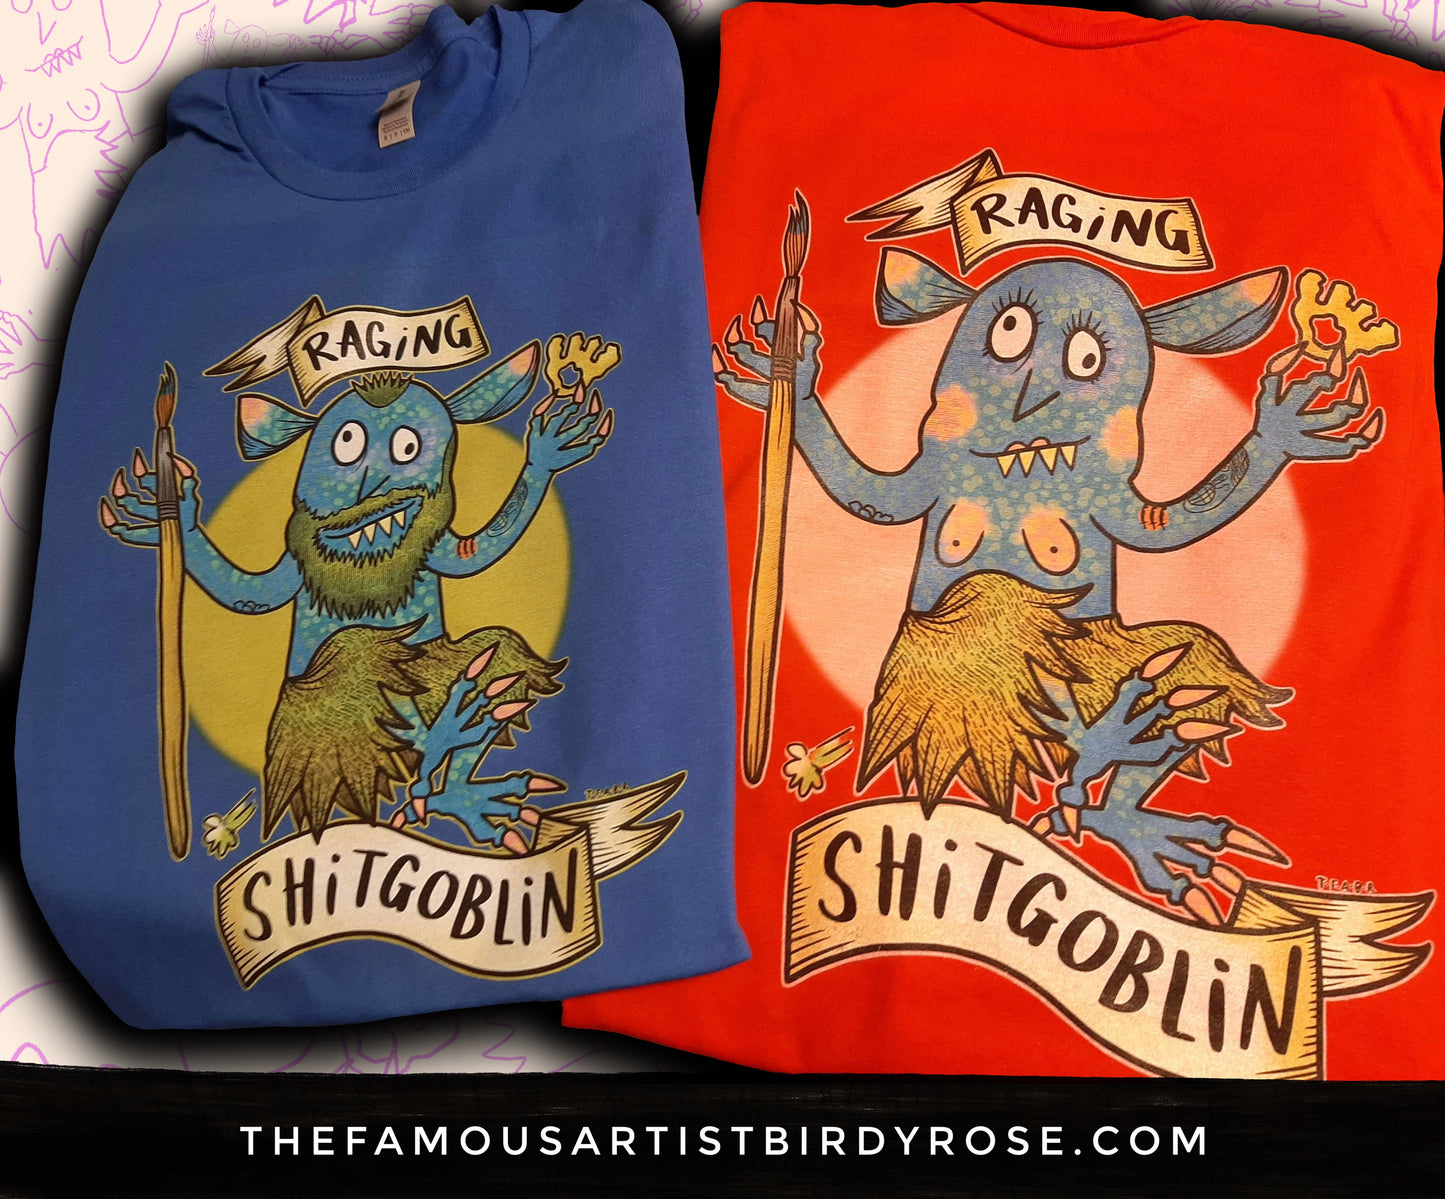 Raging ShitGoblin Male - T-Shirt